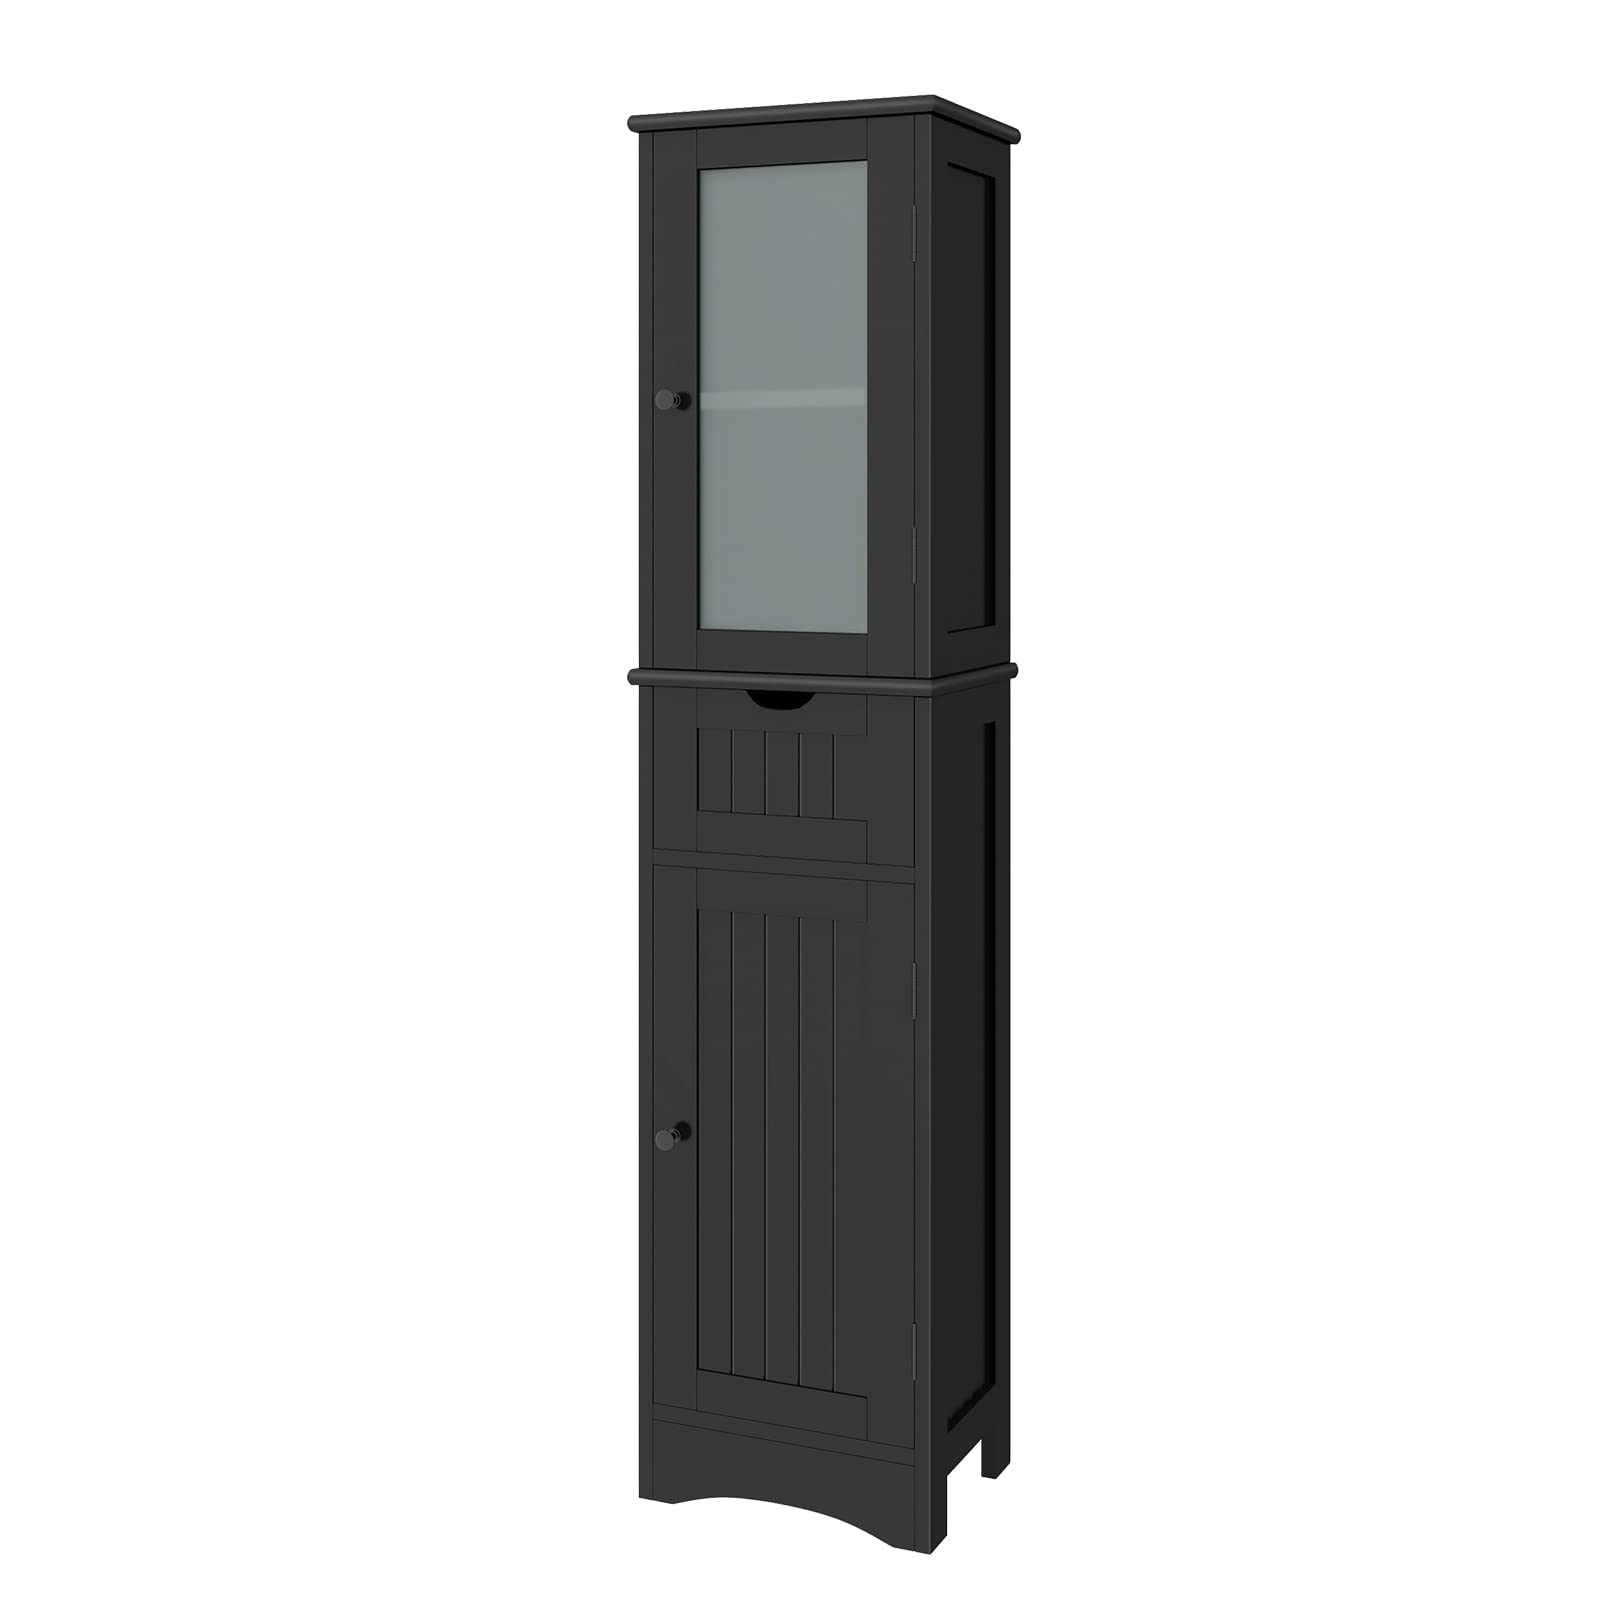 Giantex Freestanding Bathroom Storage Cabinet